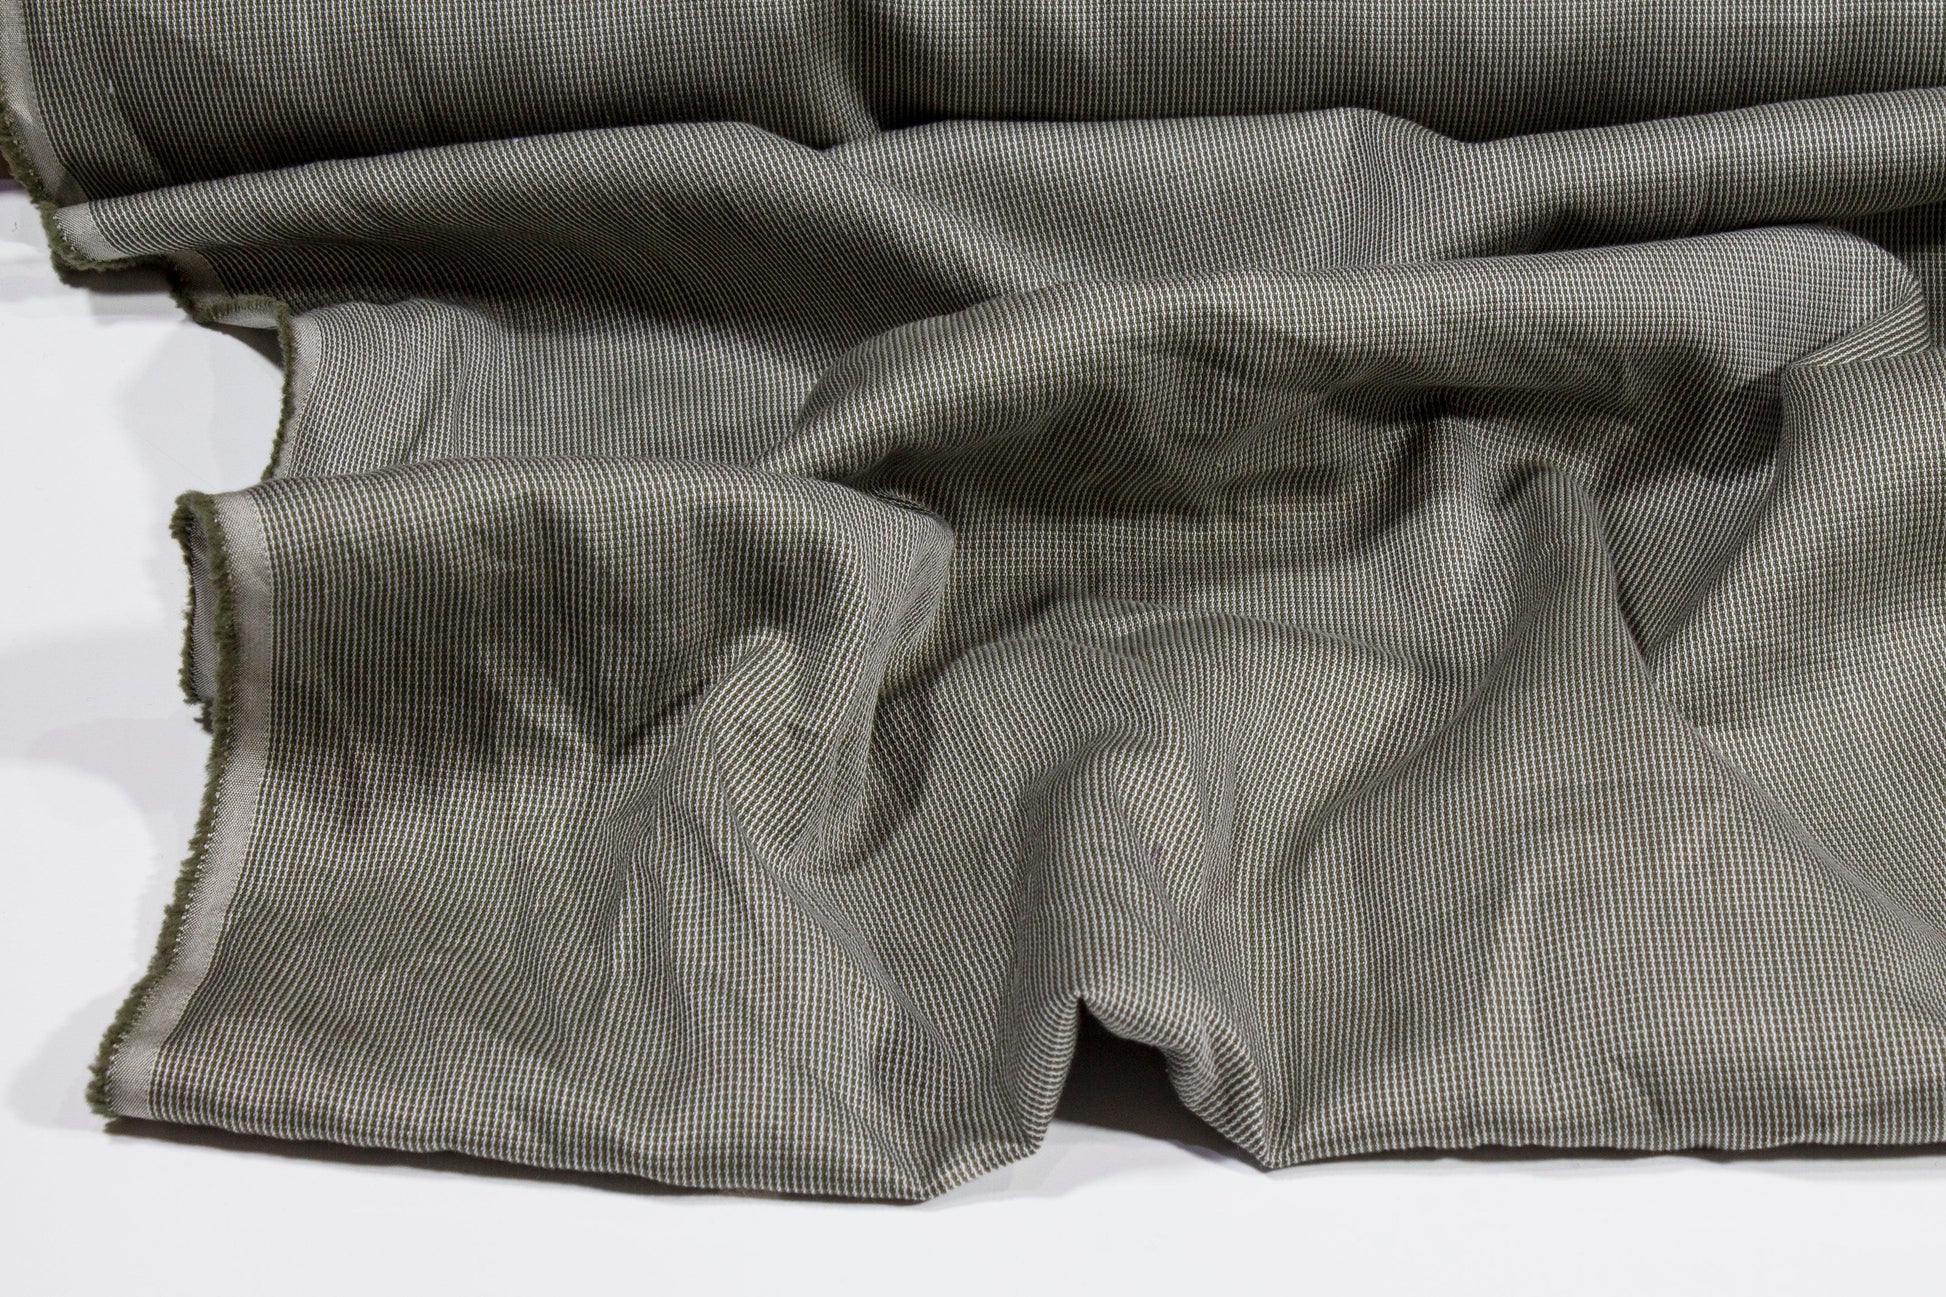 Pin Striped Cotton Shirting - Khaki Green - Prime Fabrics